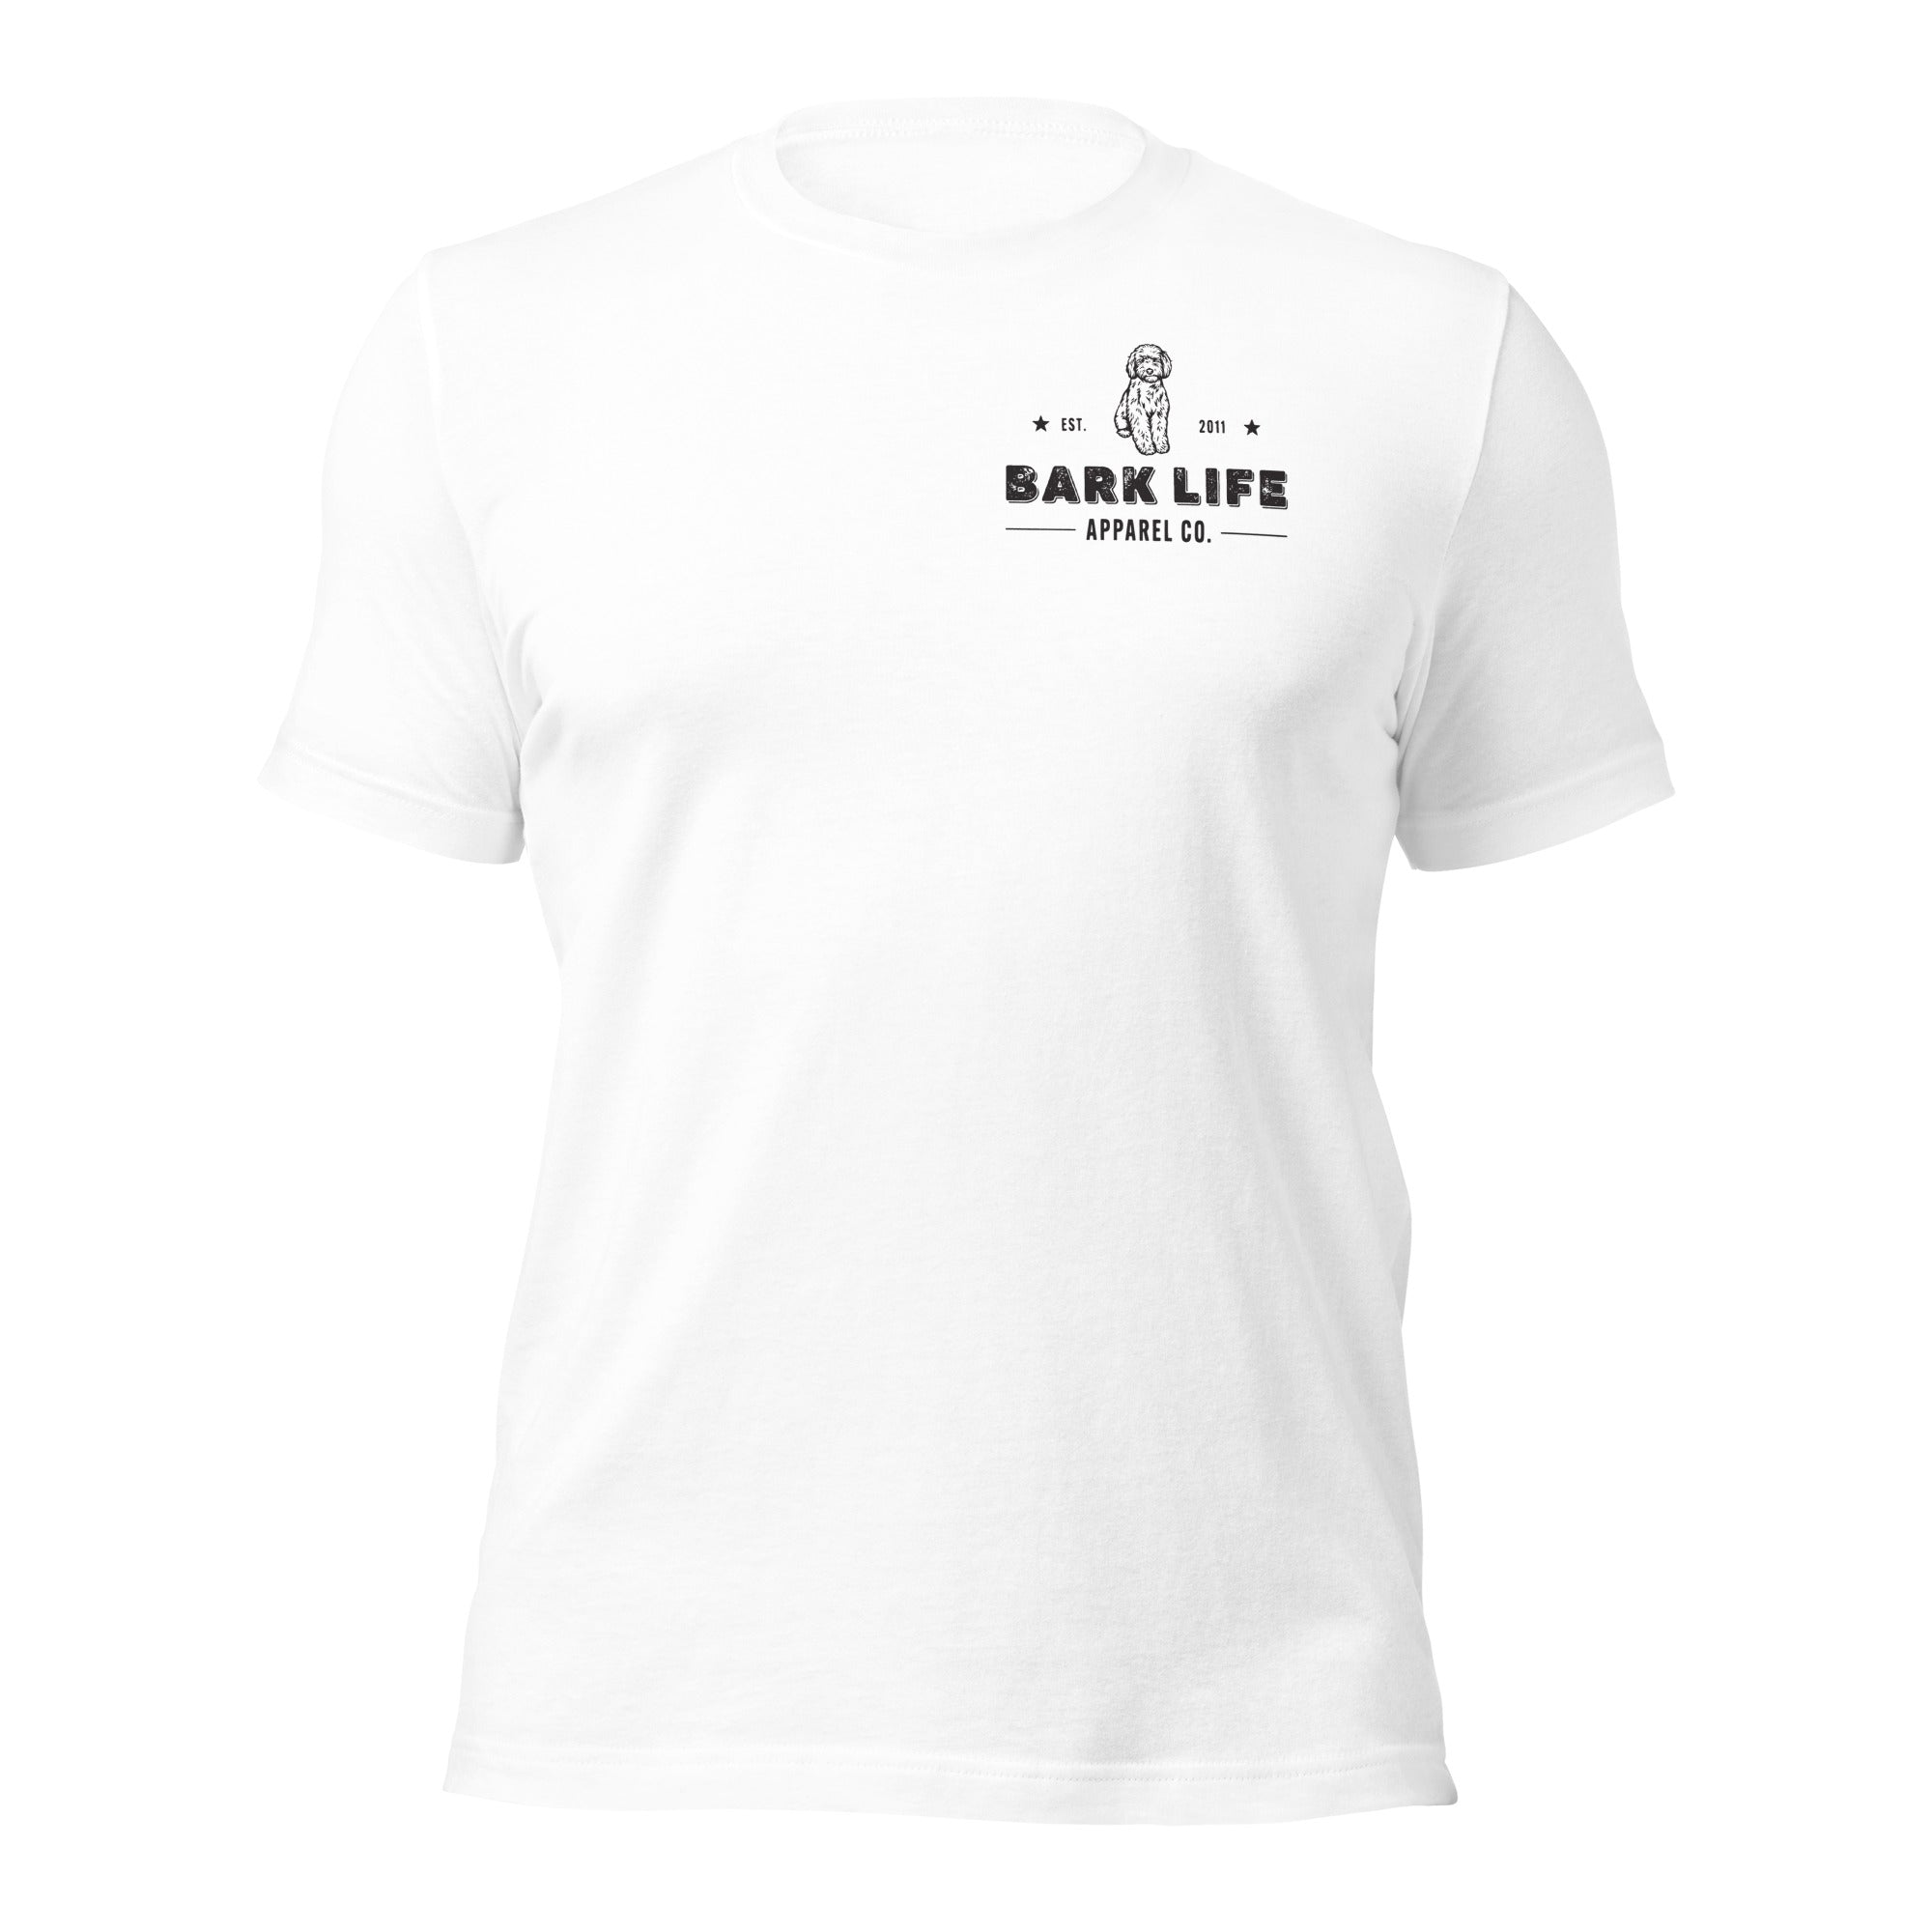 Labradoodle - Short Sleeve Cotton Tee Shirt